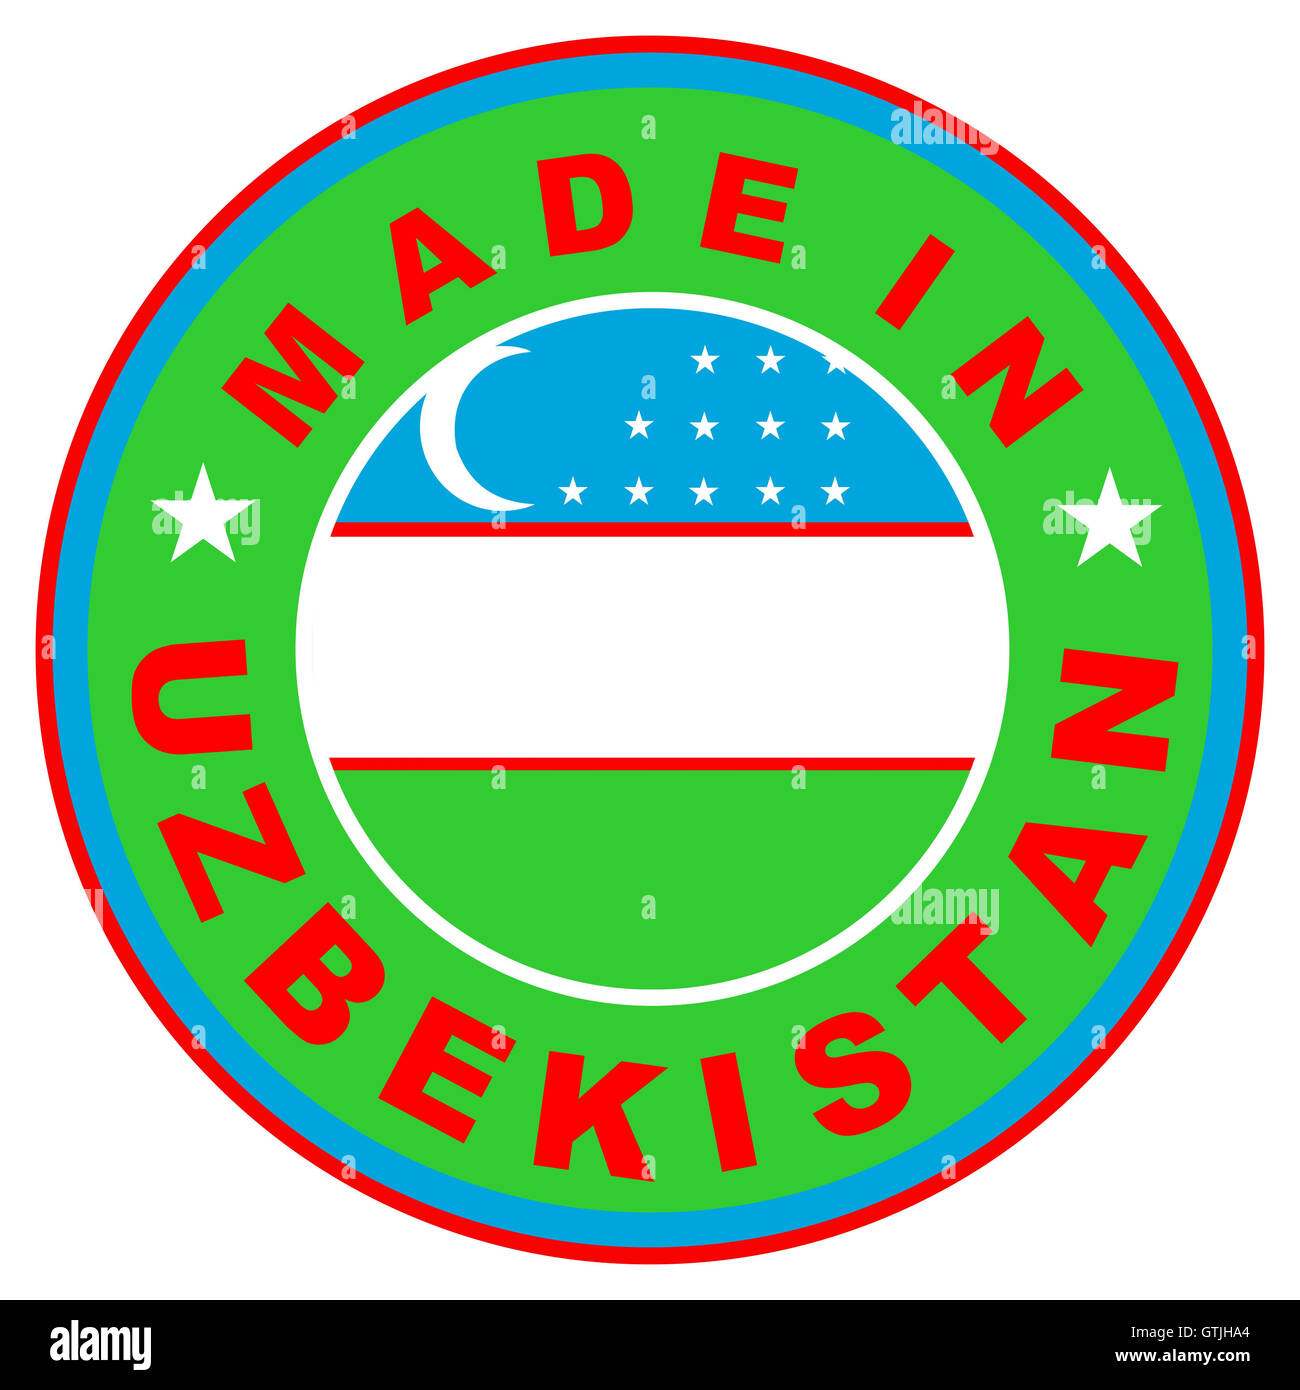 made in uzbekistan Stock Photo